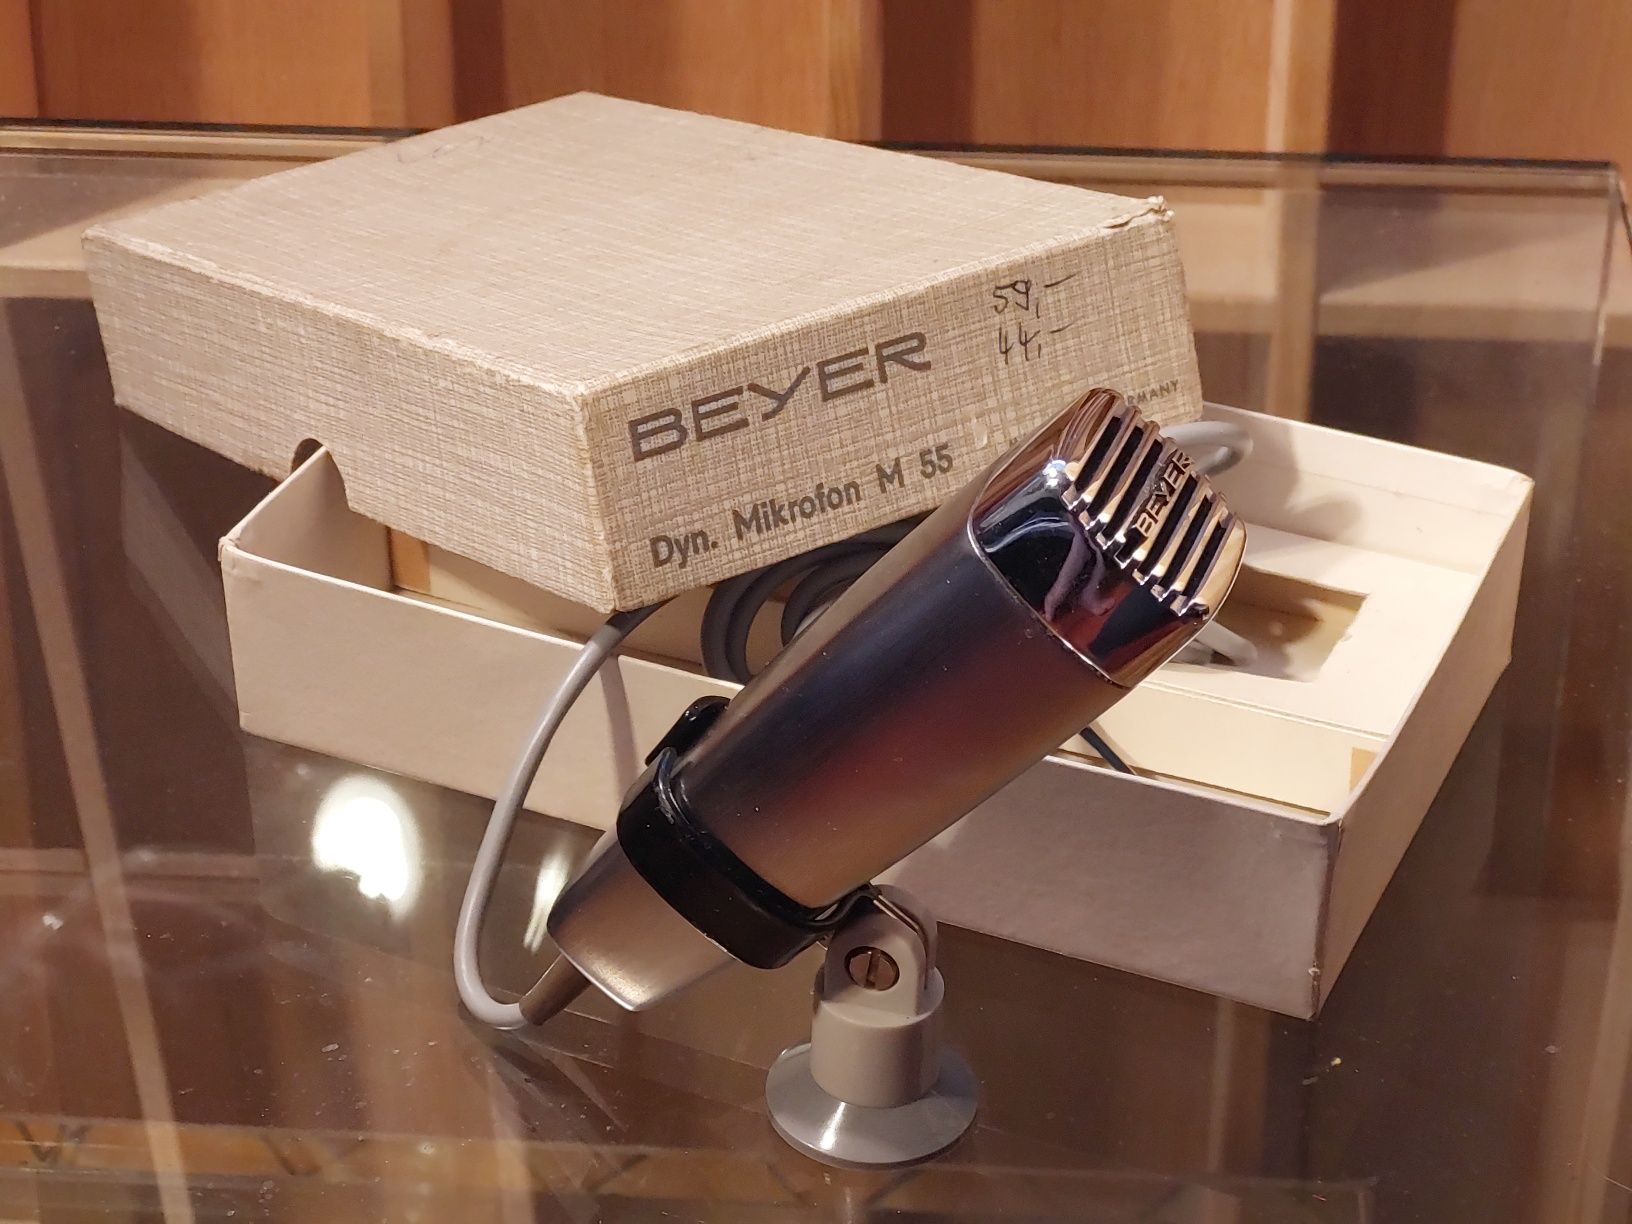 Beyer  M55  mikrofon  1967 r studyjny vintage Beyerdynamic
Beyer - M55